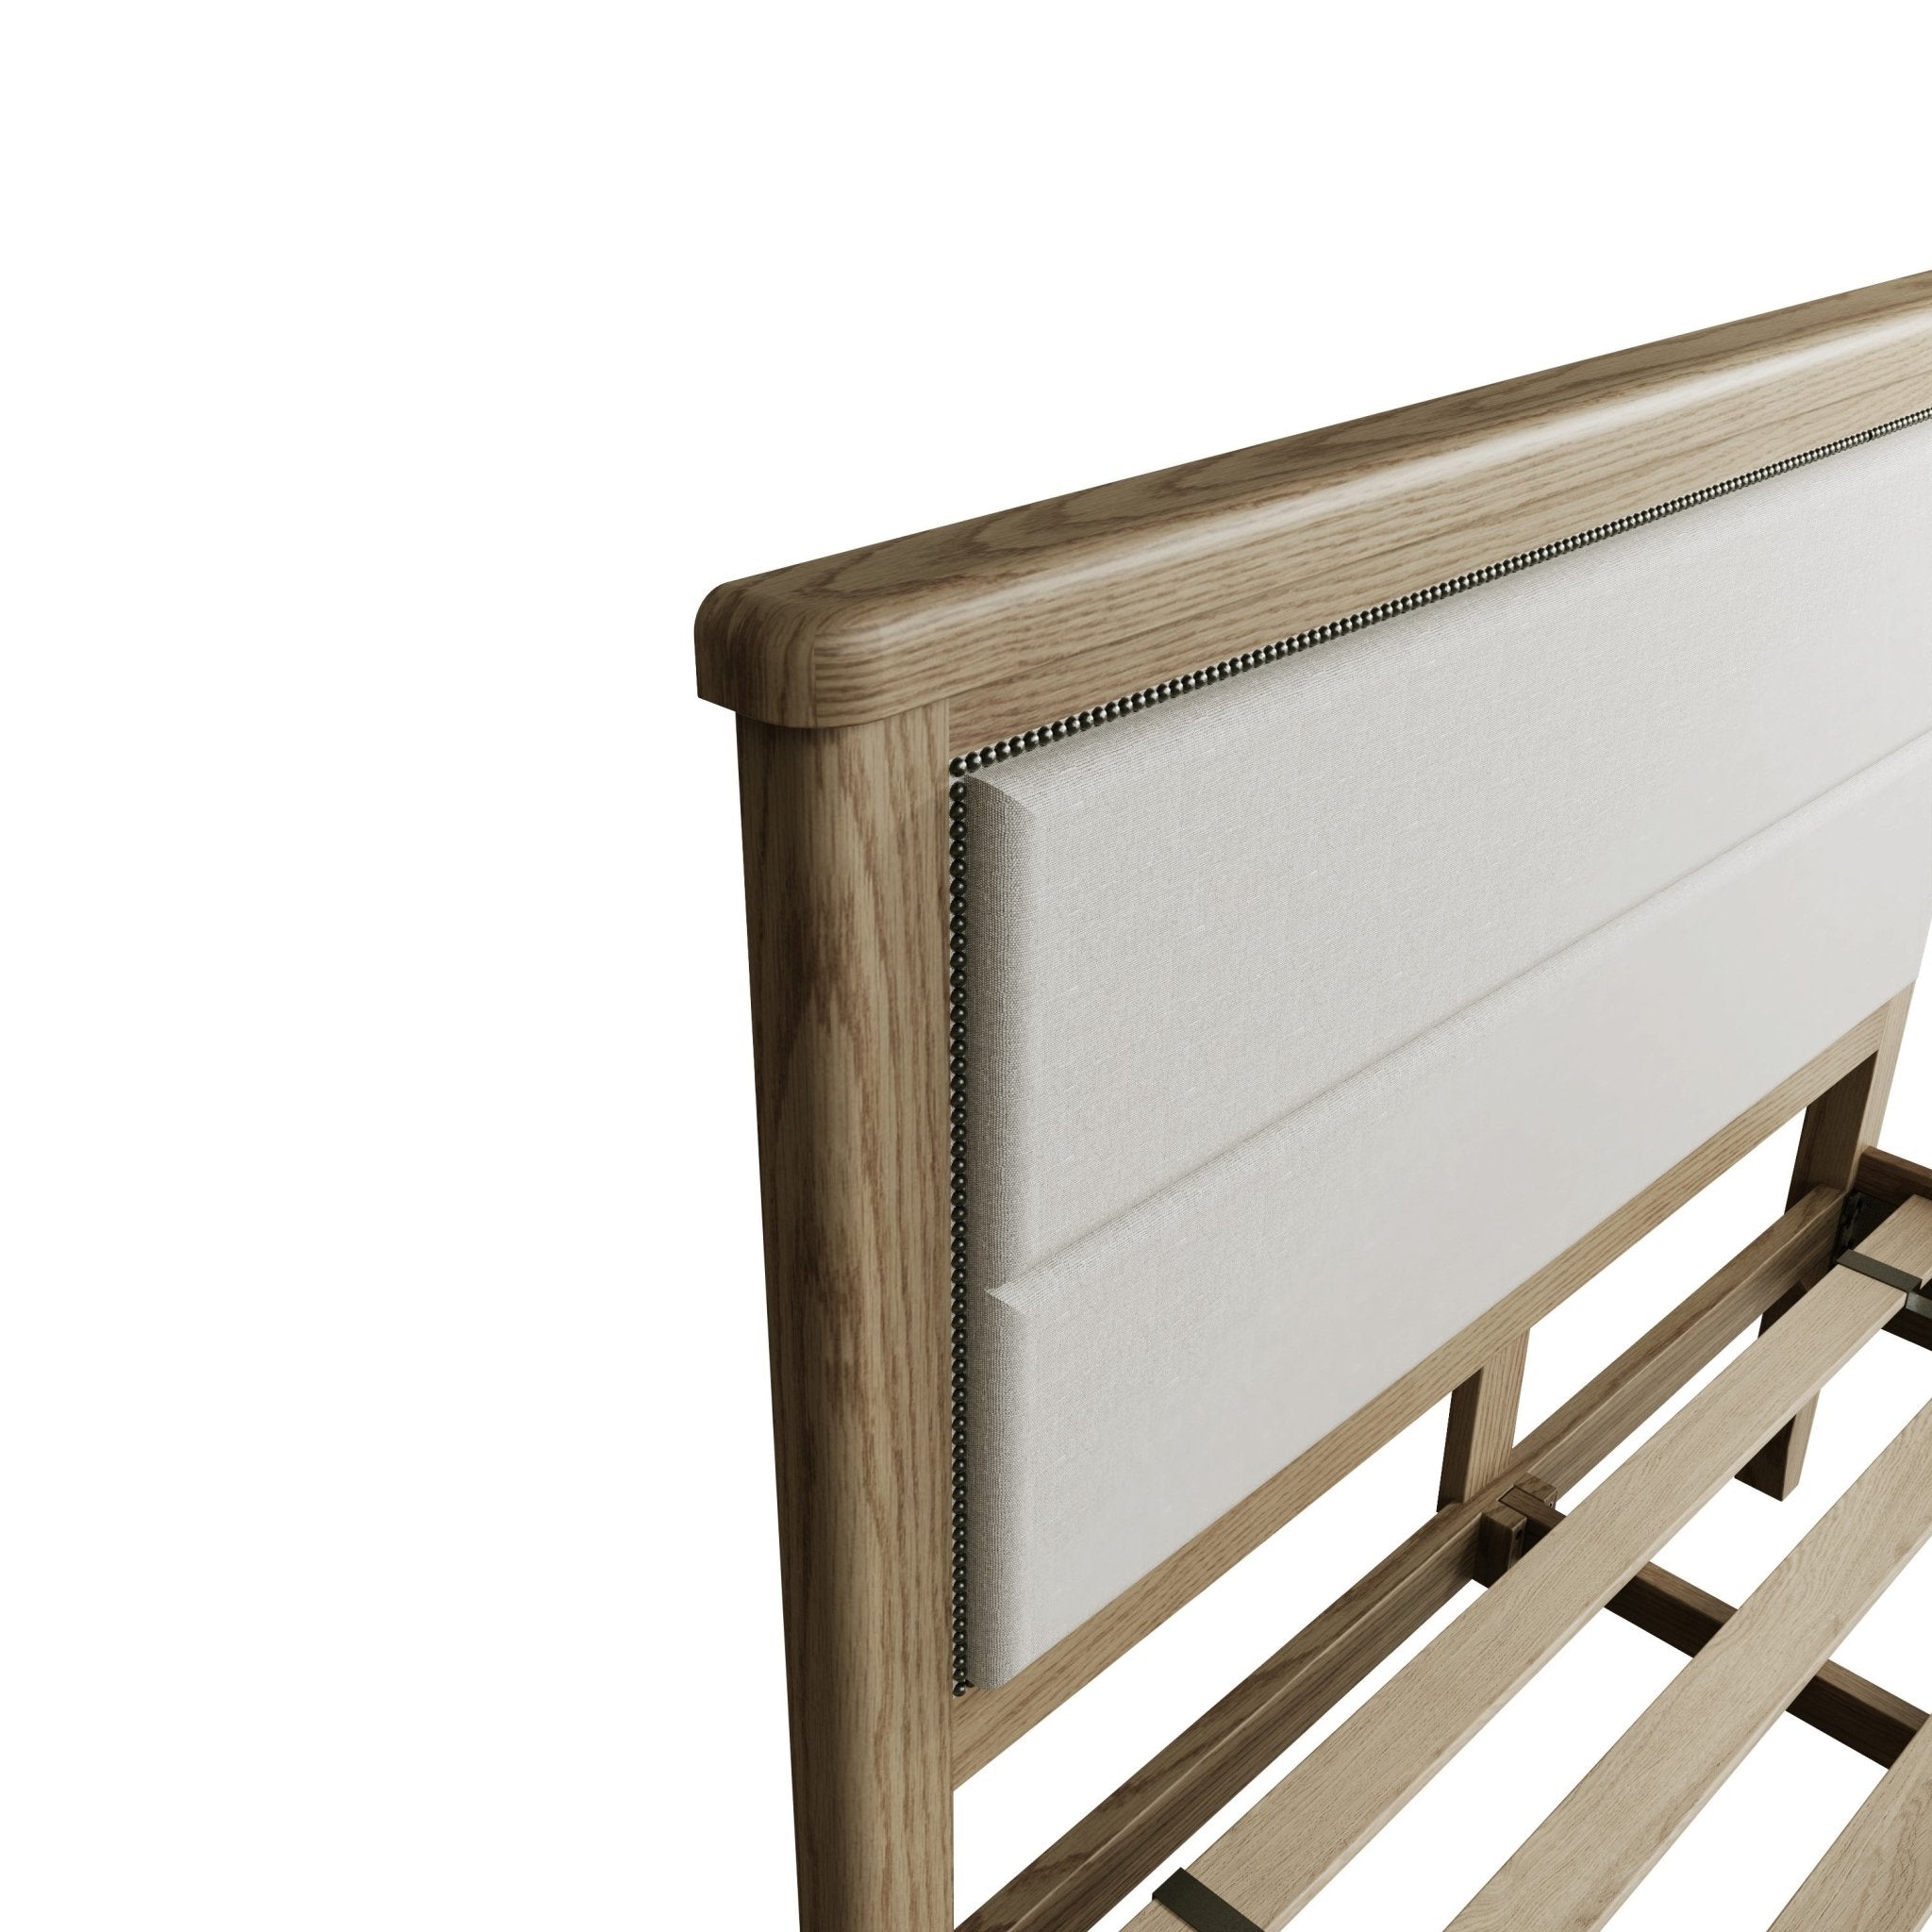 Rusper Oak 4'6" Double Bed Frame - Fabric Headboard - Duck Barn Interiors